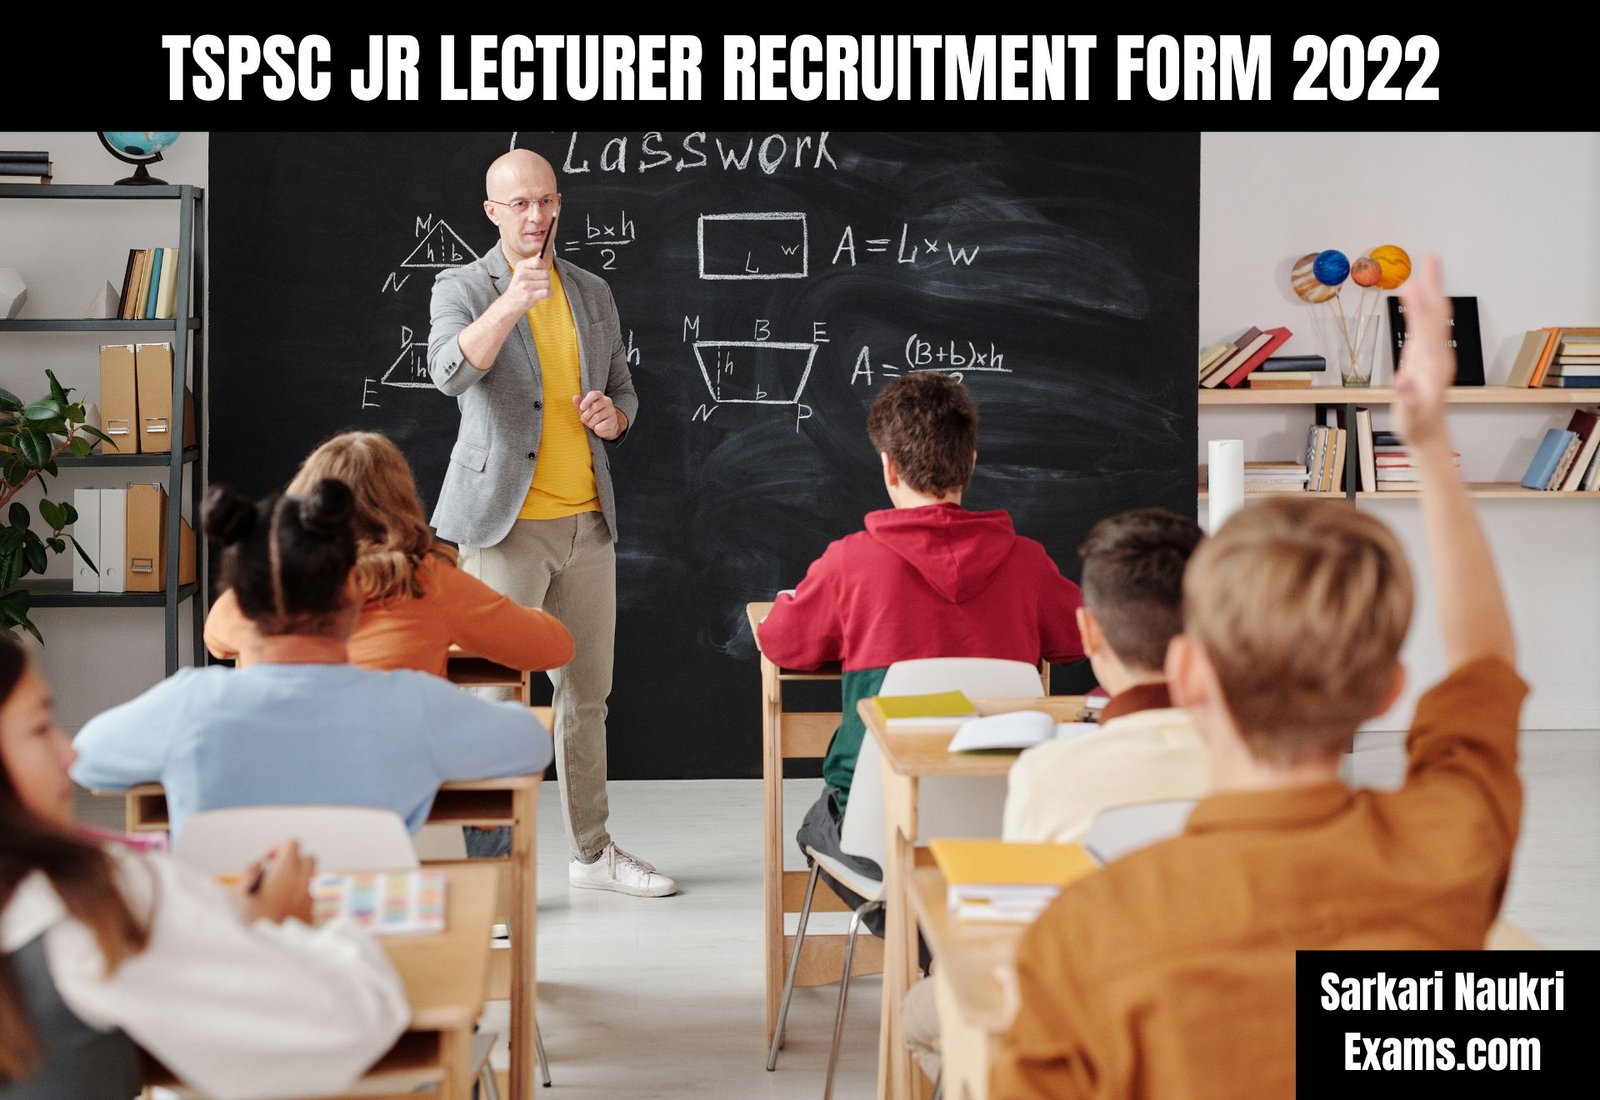 TSPSC Jr Lecturer Recruitment Form 2022